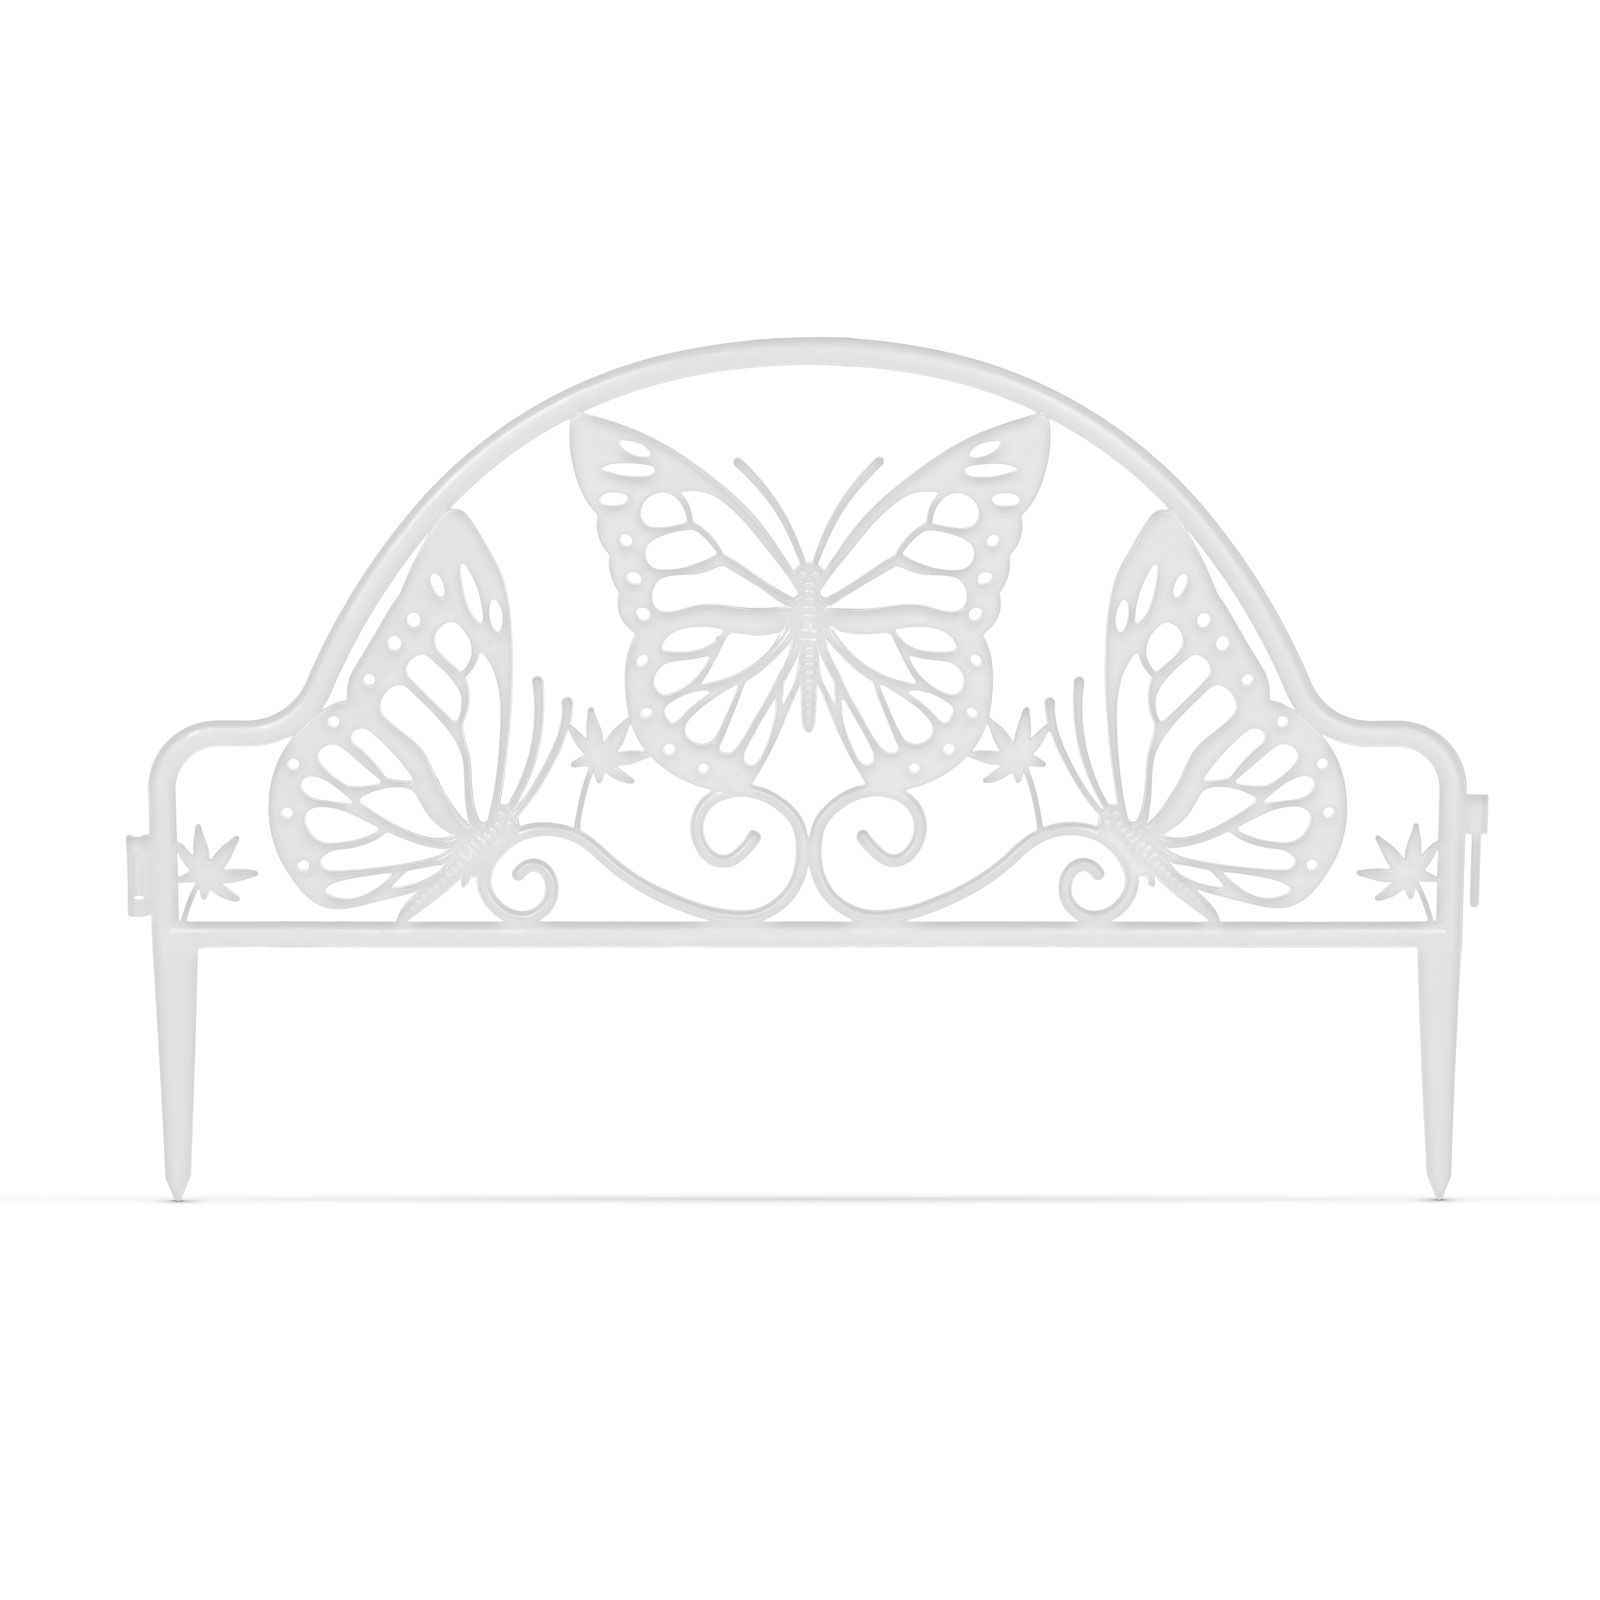 Garden of Eden - Bordură pentru pat de flori / gard - 49,5 x 31 cm